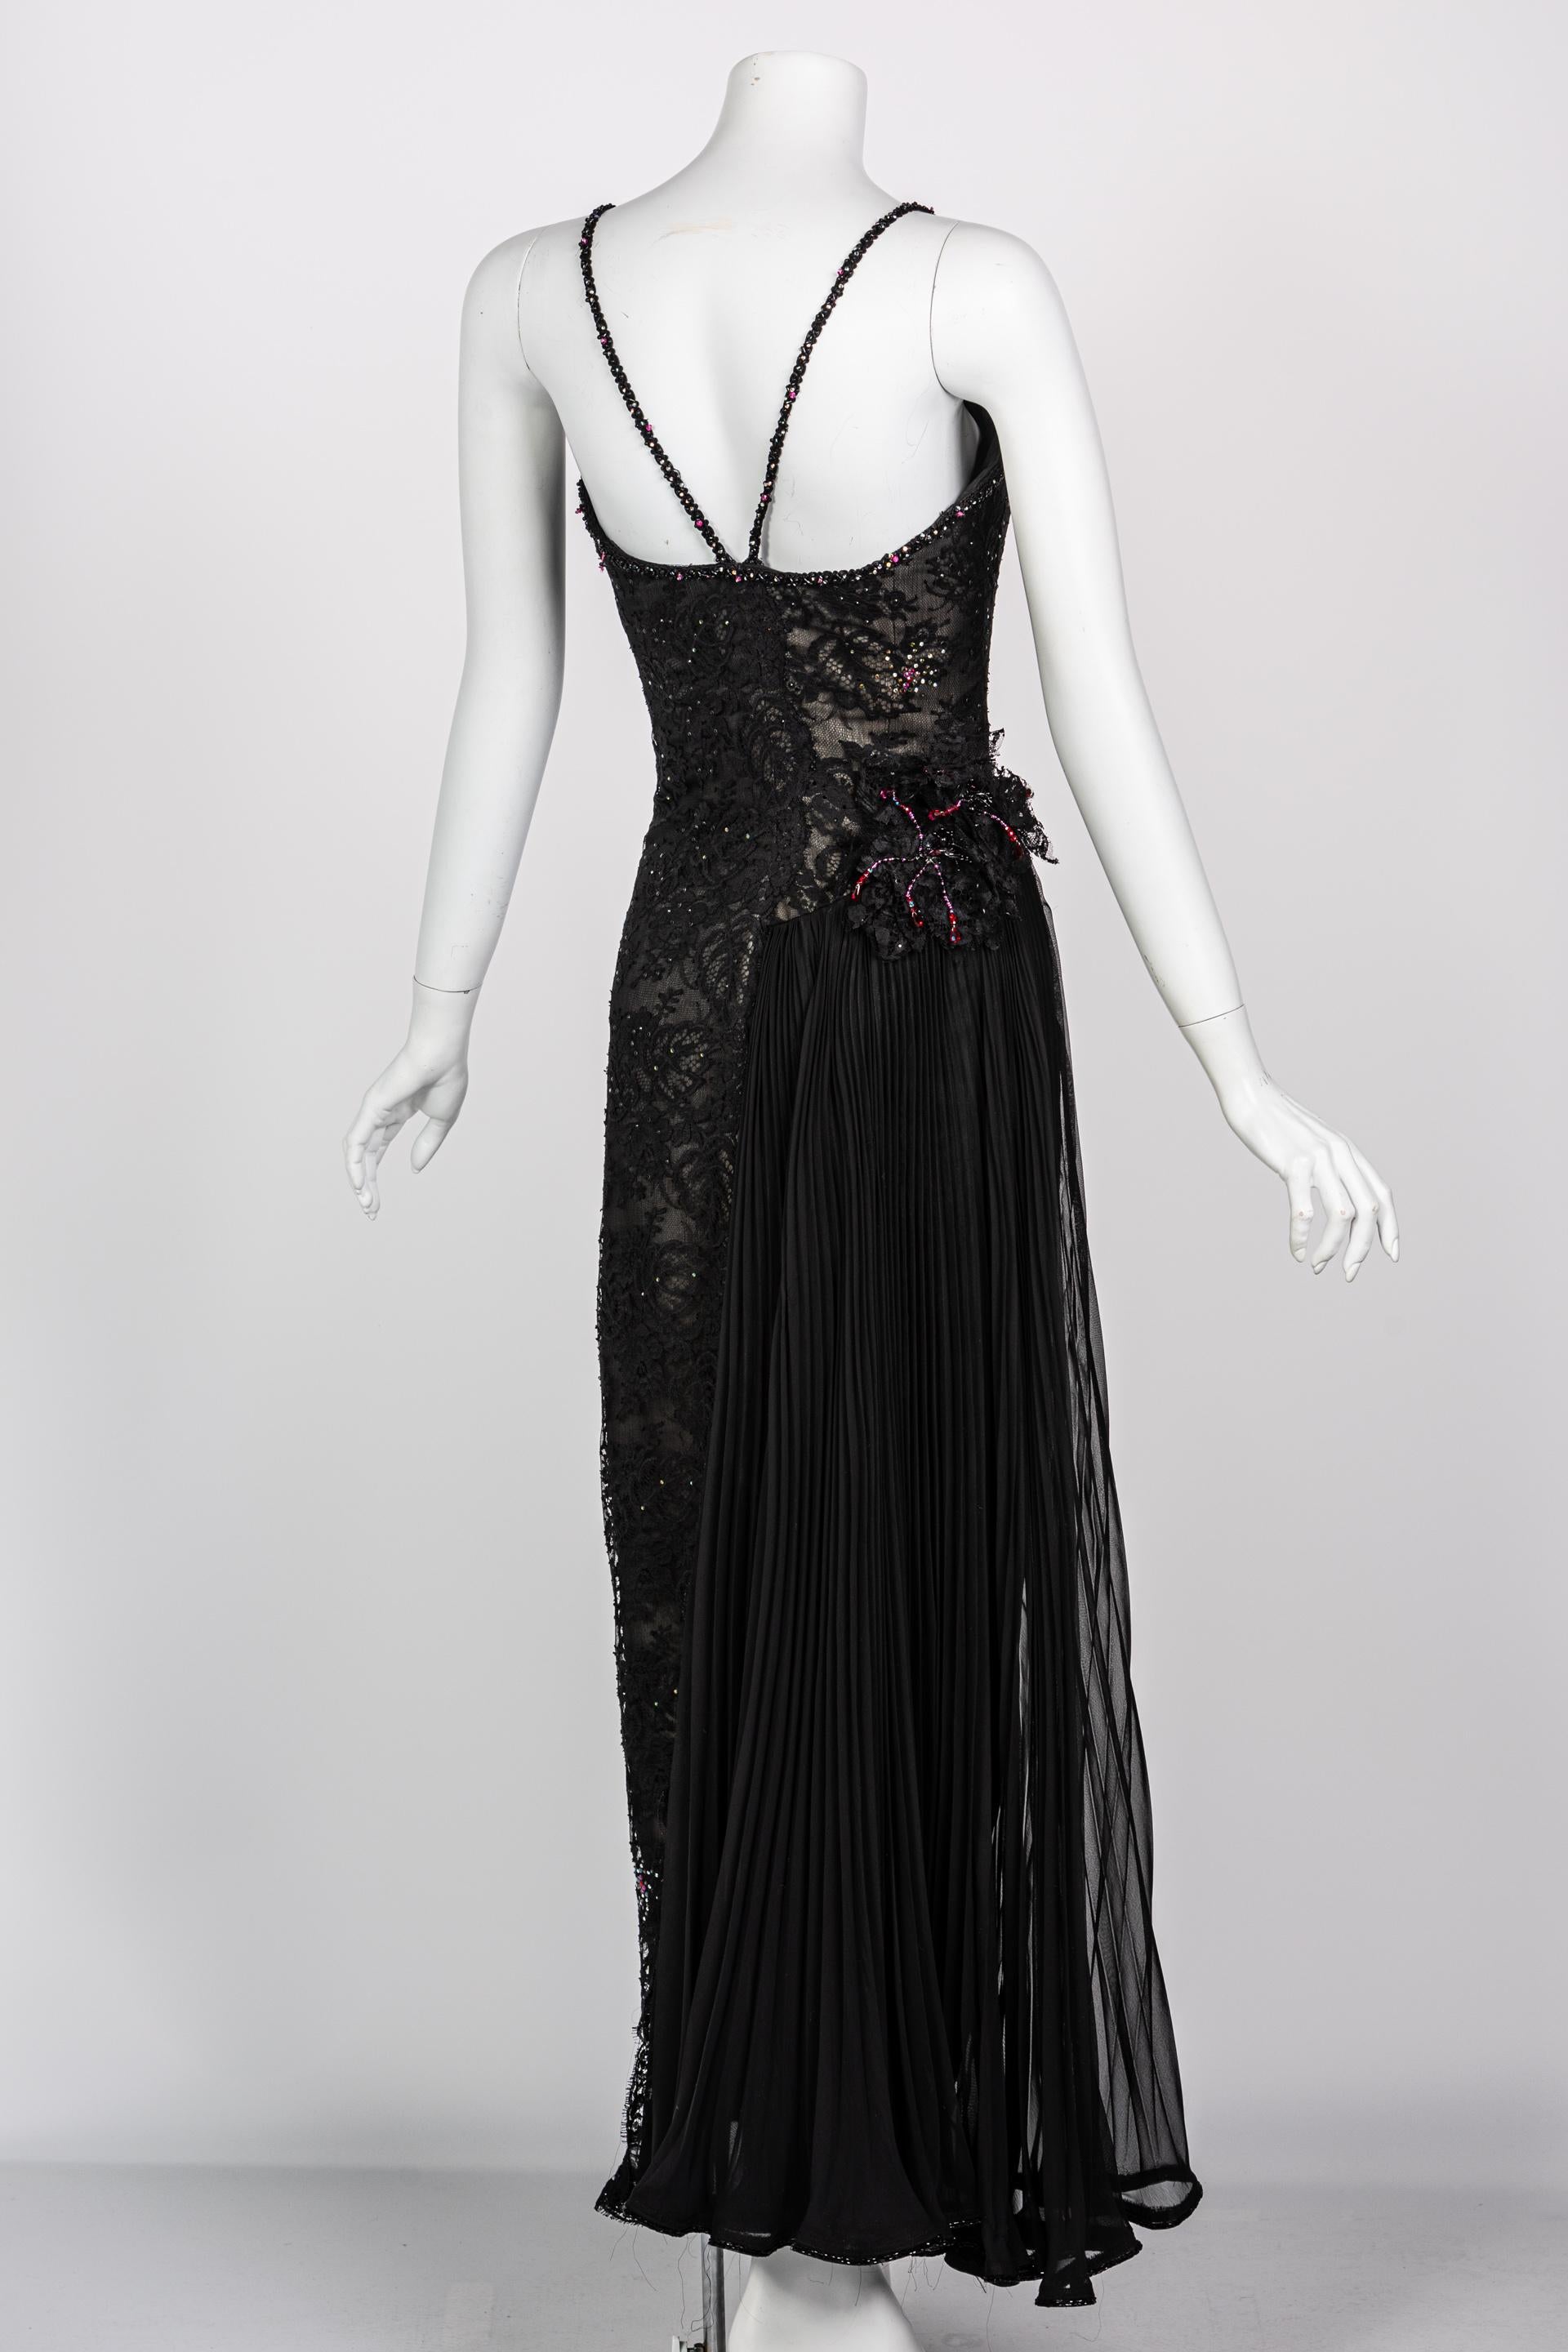 Vintage Sam Carlin Saks Fifth Avenue Black Lace Gown For Sale 2